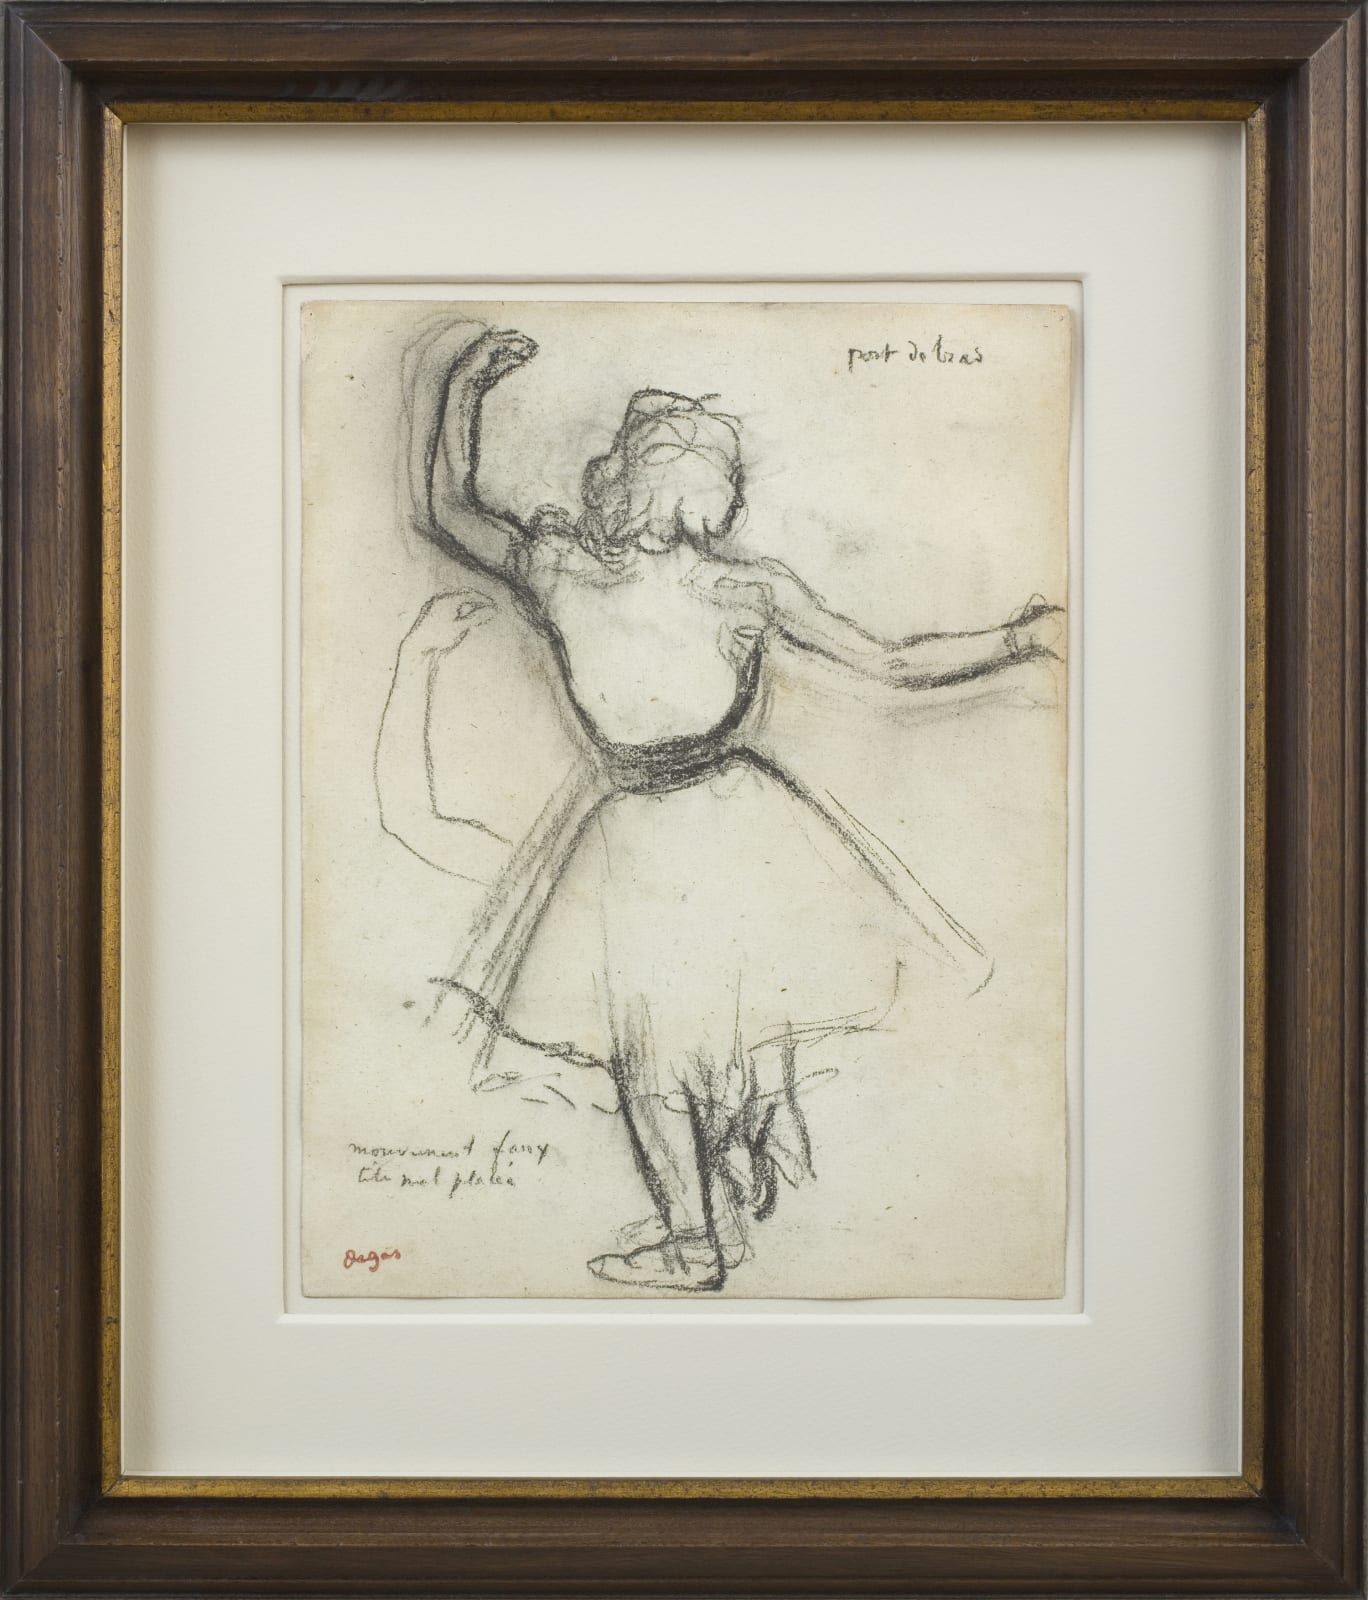 Edgar Degas, Danseuse vue de dos: Port de bras, 1875-85, c.